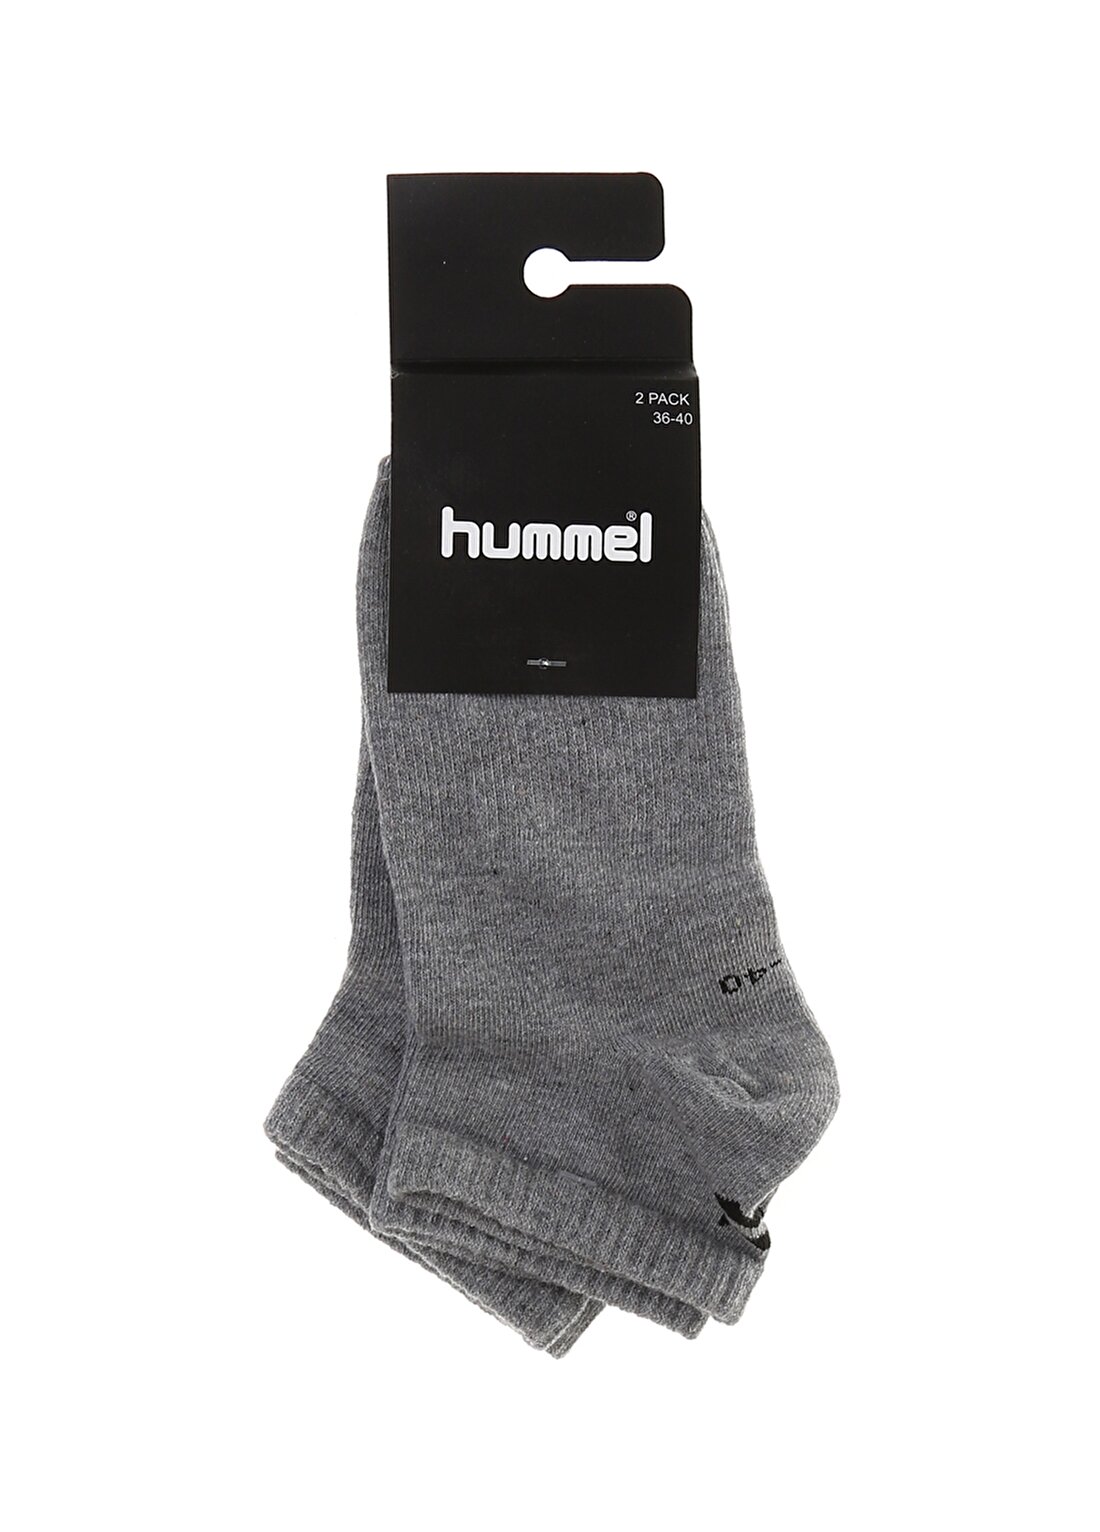 Hummel 970006 Spor Çorap